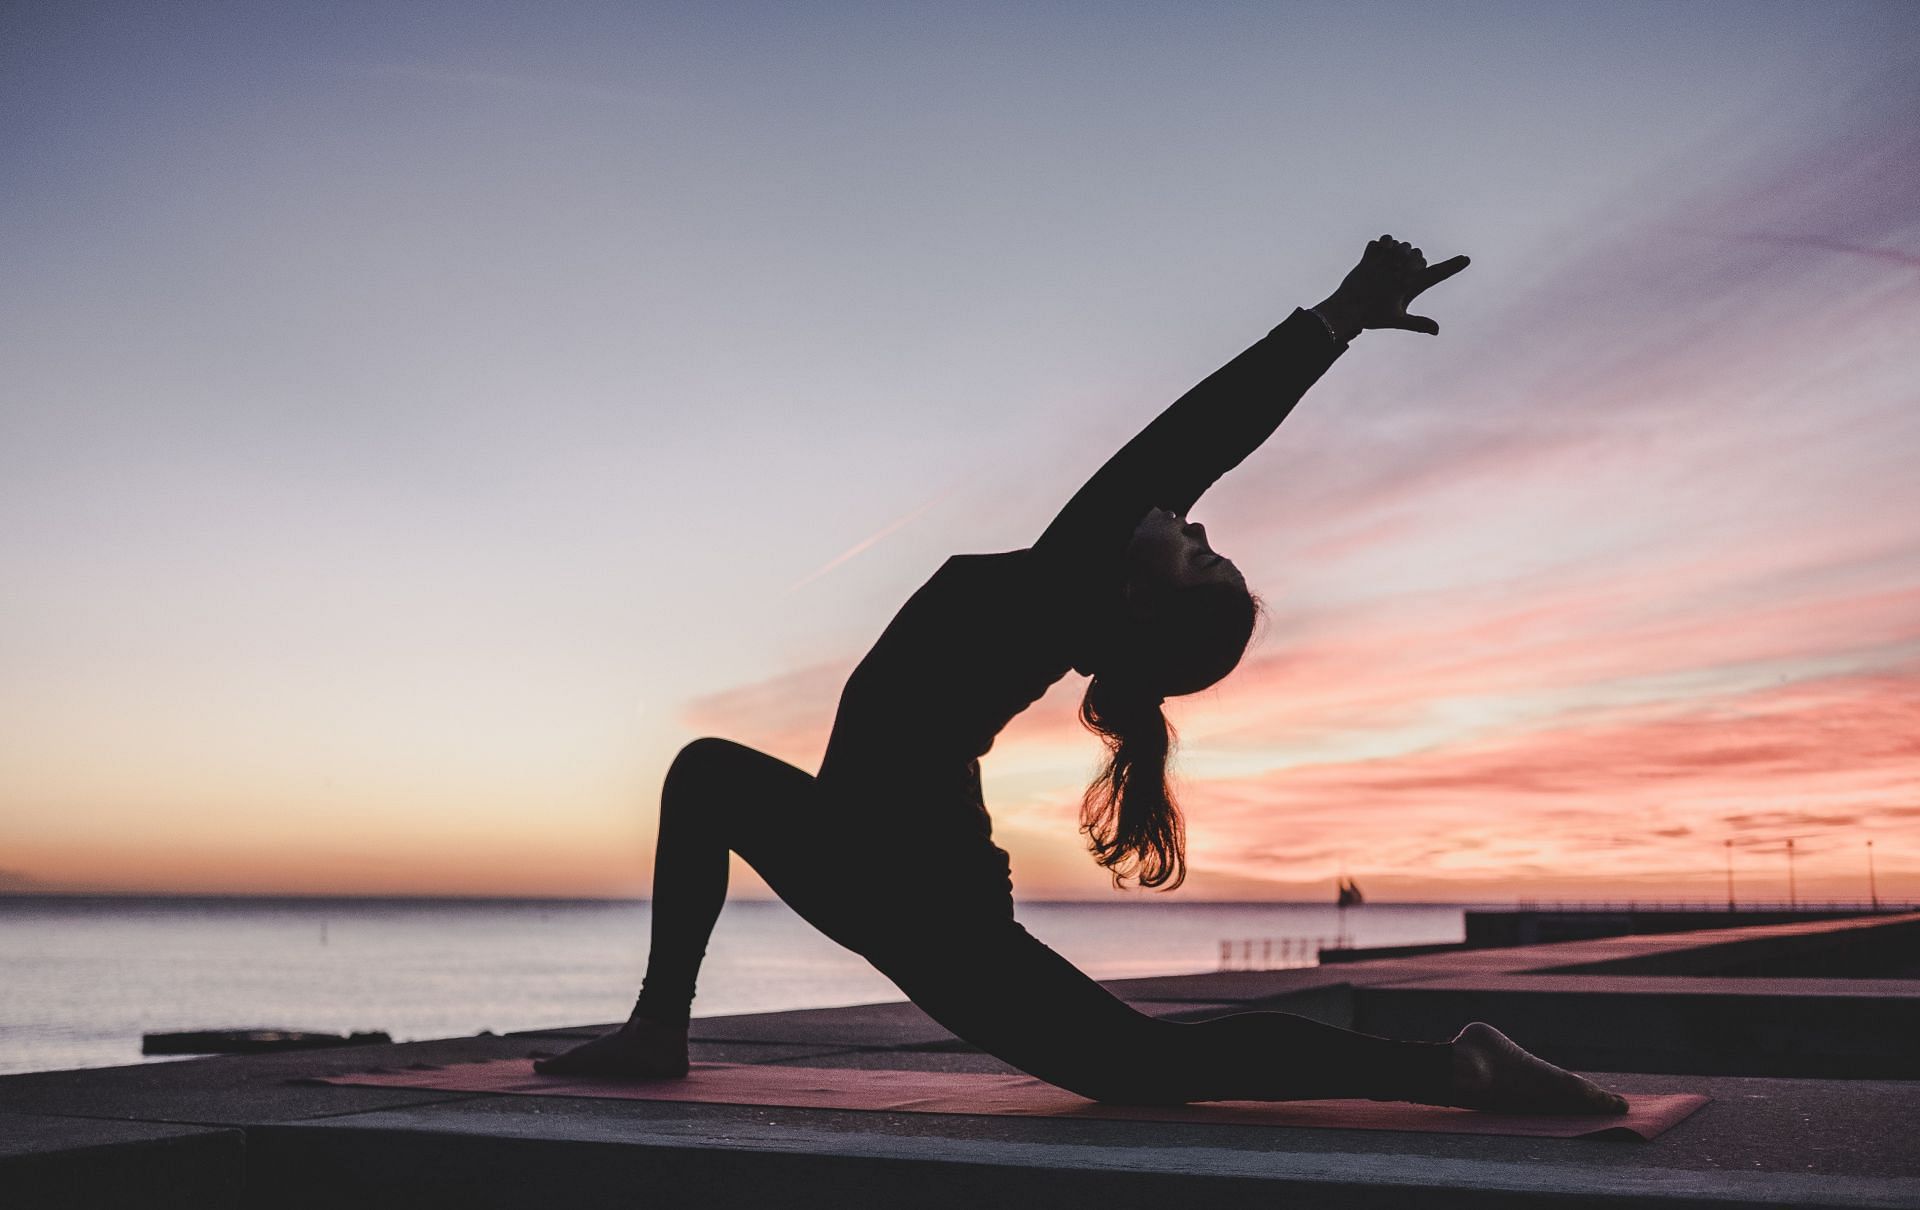 Morning yoga routine poses increases flexibility &amp; improves circulation. (Image via Unsplash / Kike Vega)